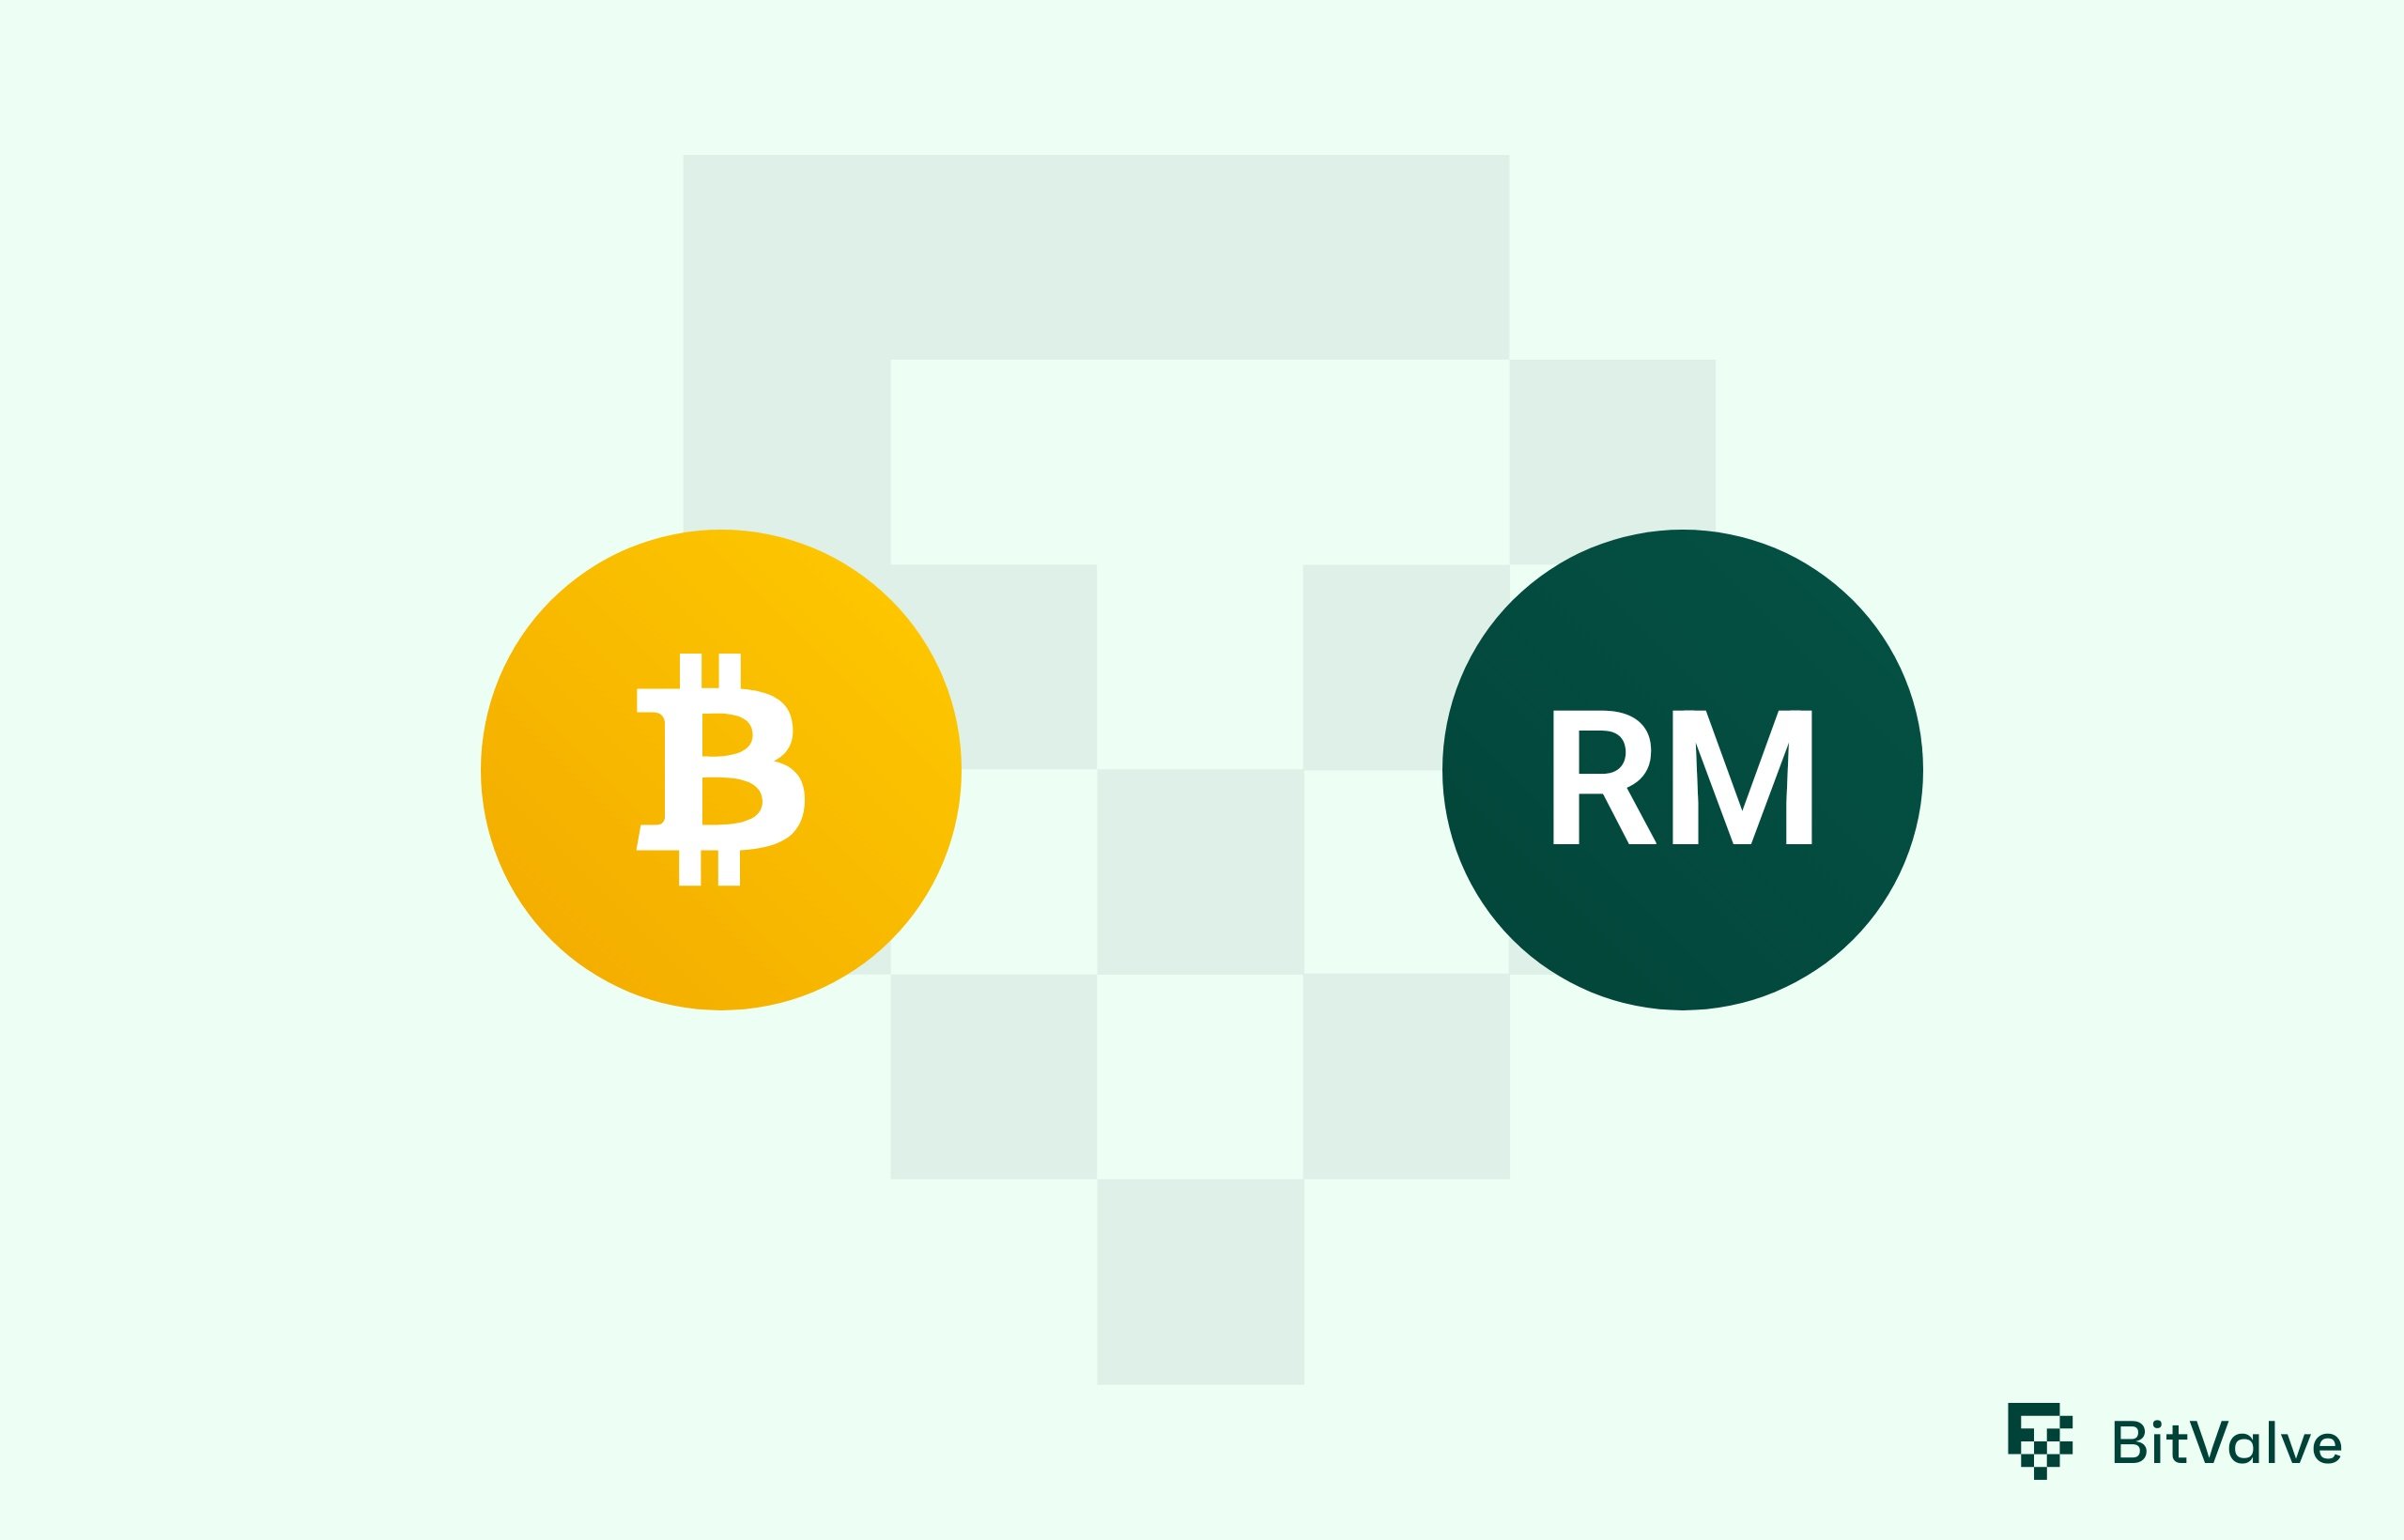 2 Bitcoin to Malaysian Ringgit or convert 2 BTC to MYR